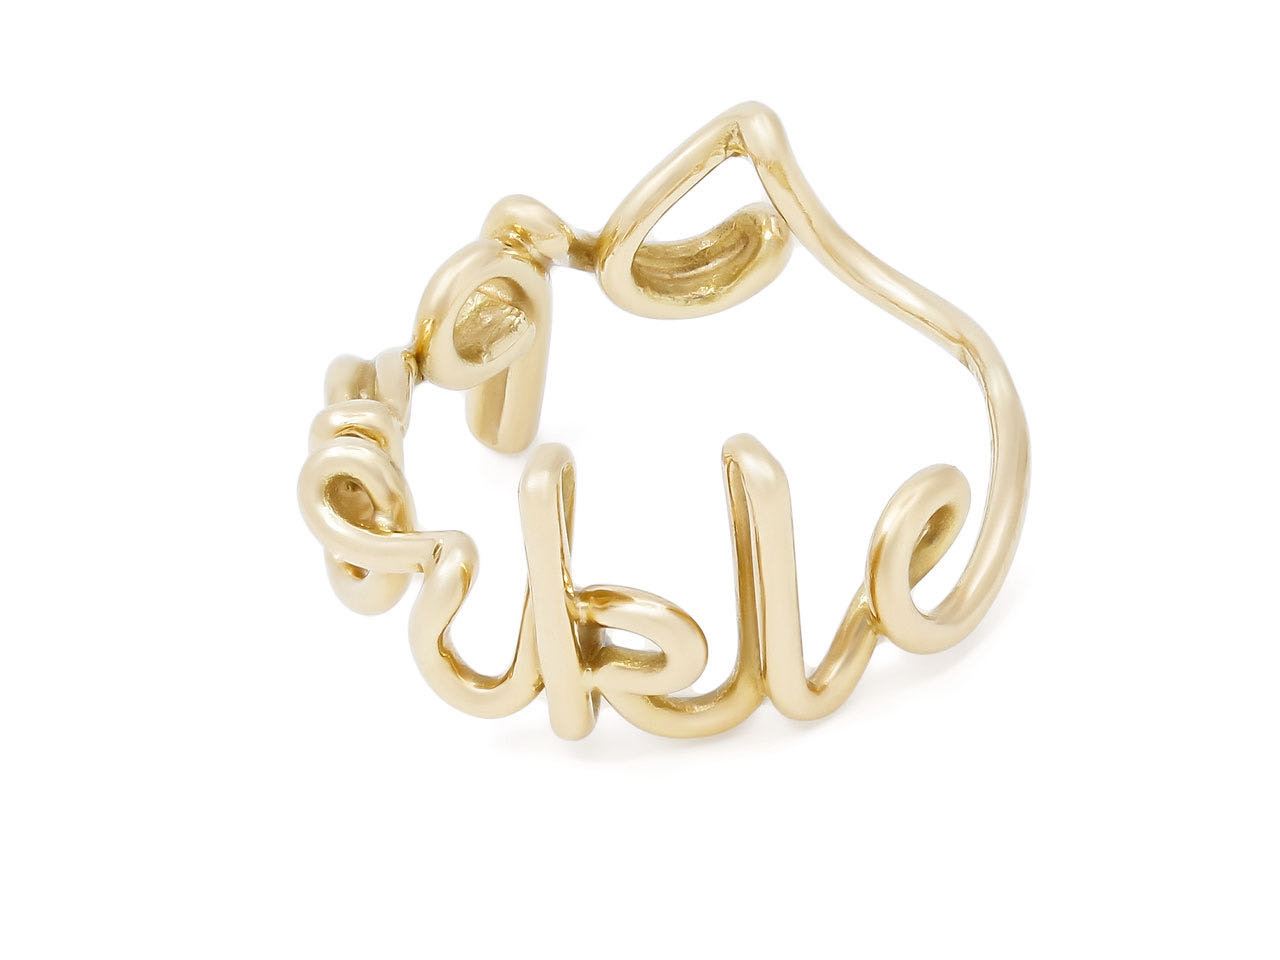 'Written' Ring in 18K Gold, by Solange Azagury-Partridge